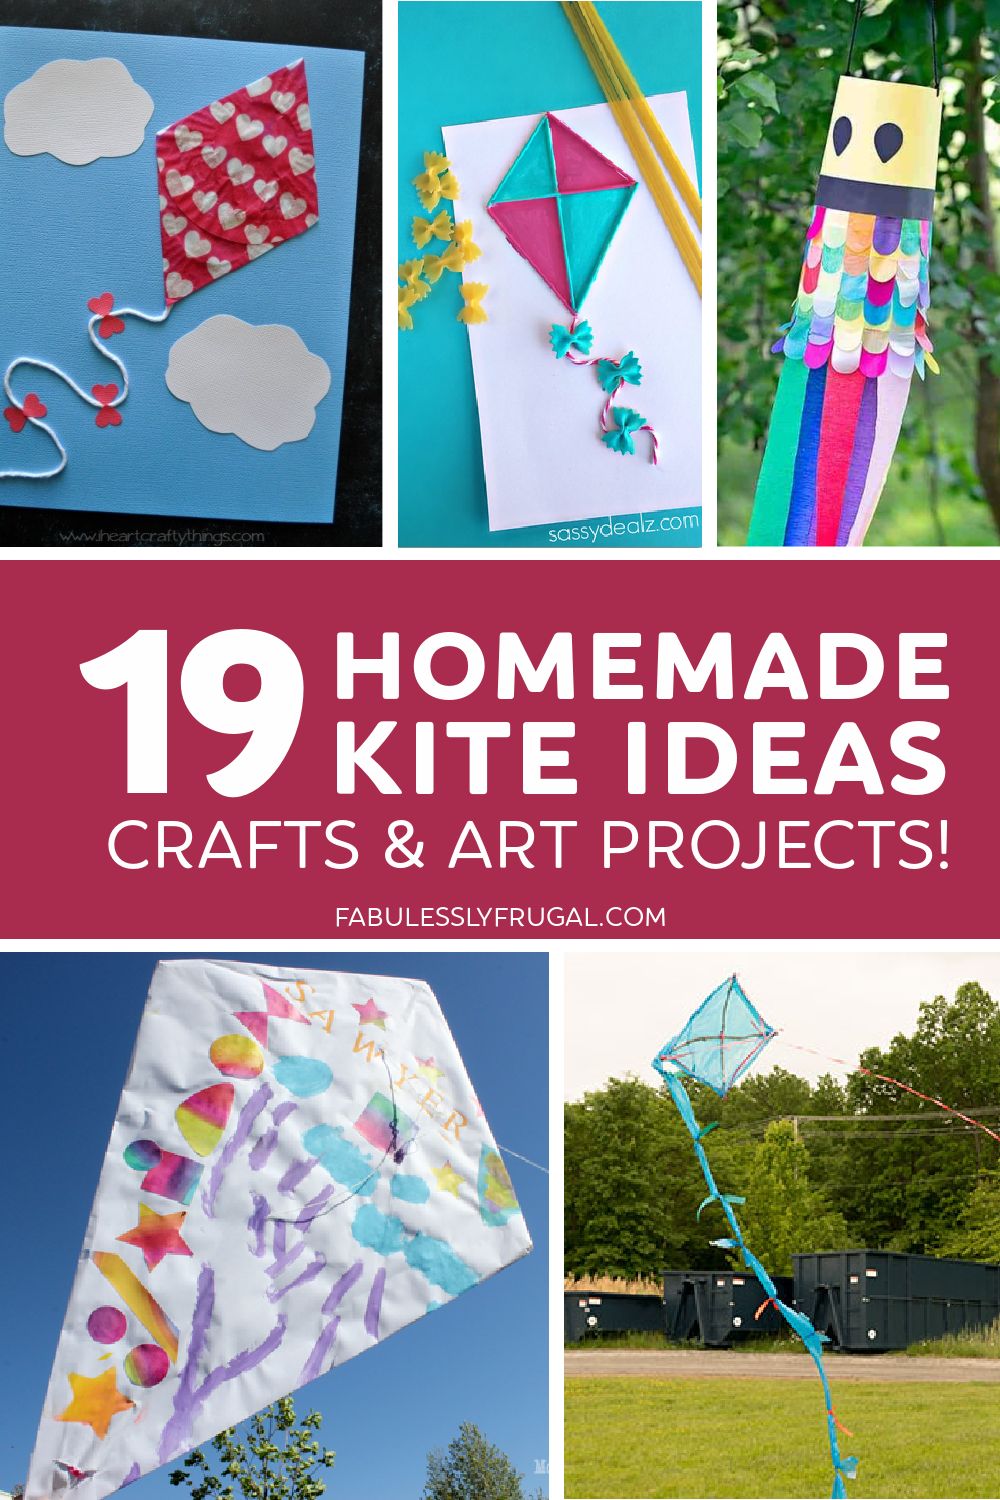 Kite art and crafts